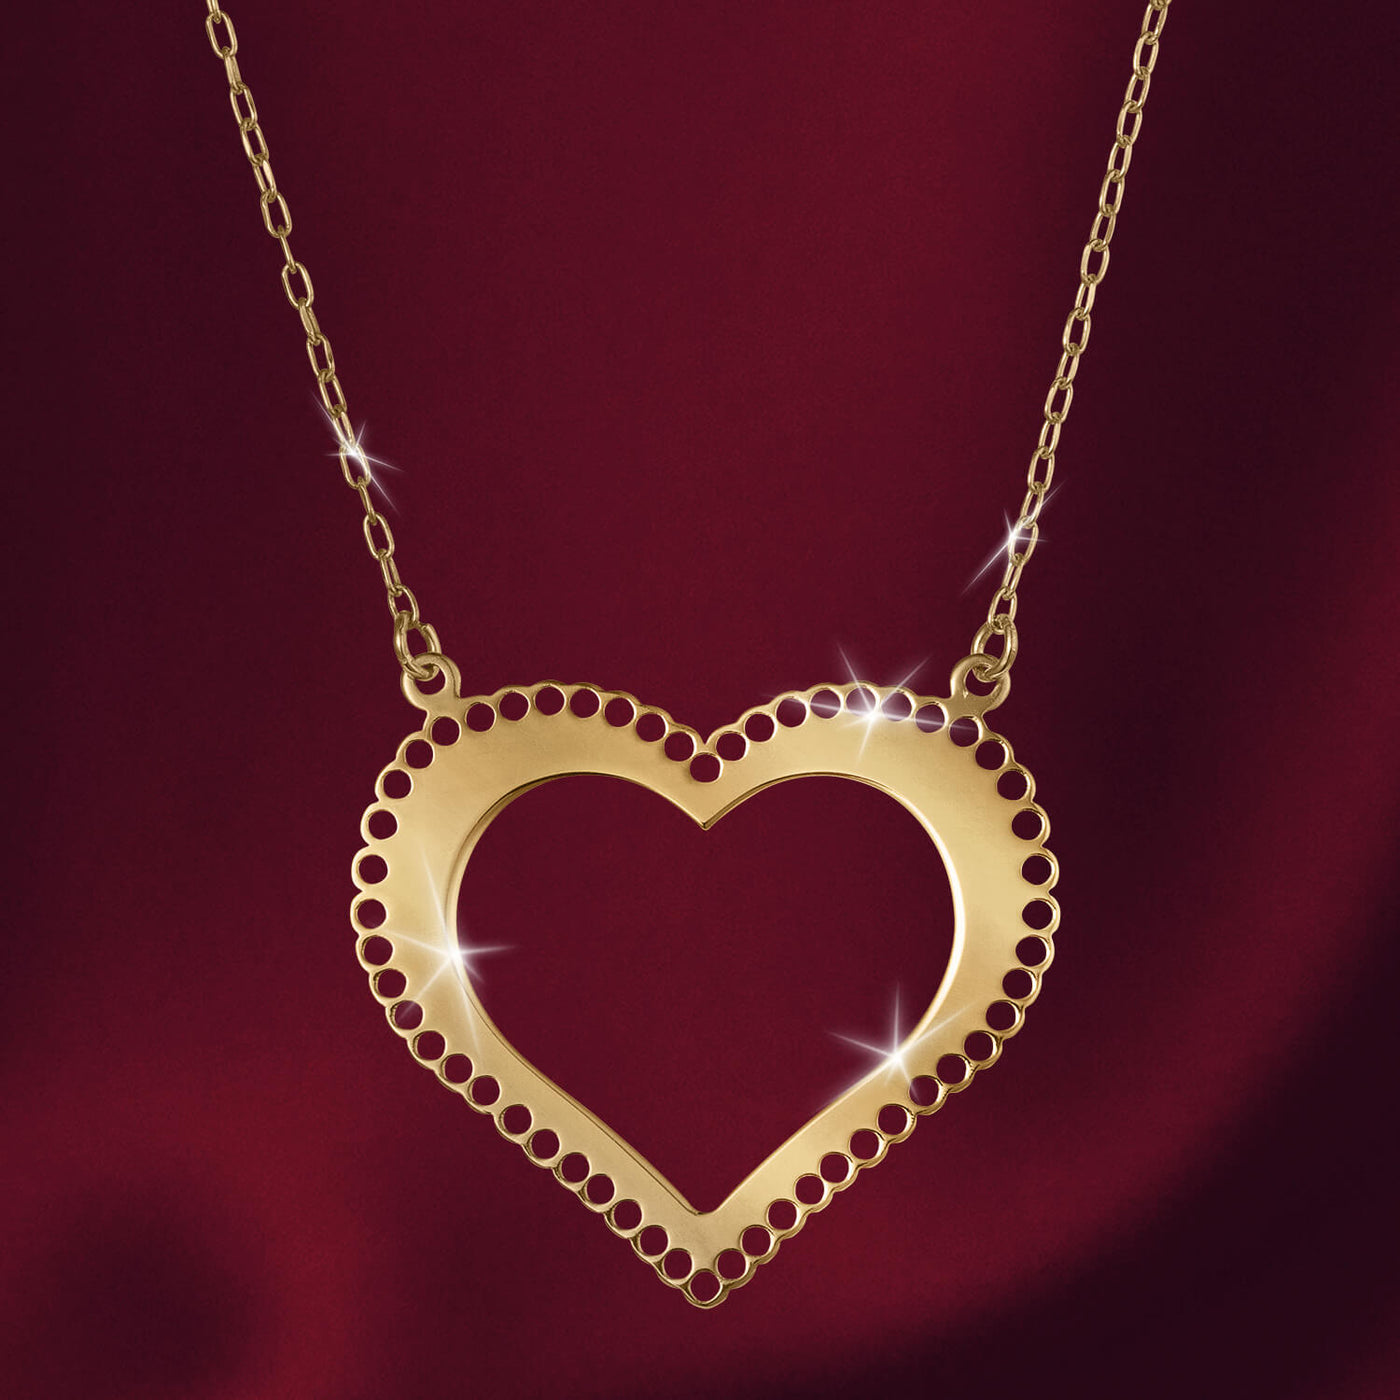 Daniel Steiger Tesoro Vero Golden Heart Necklace